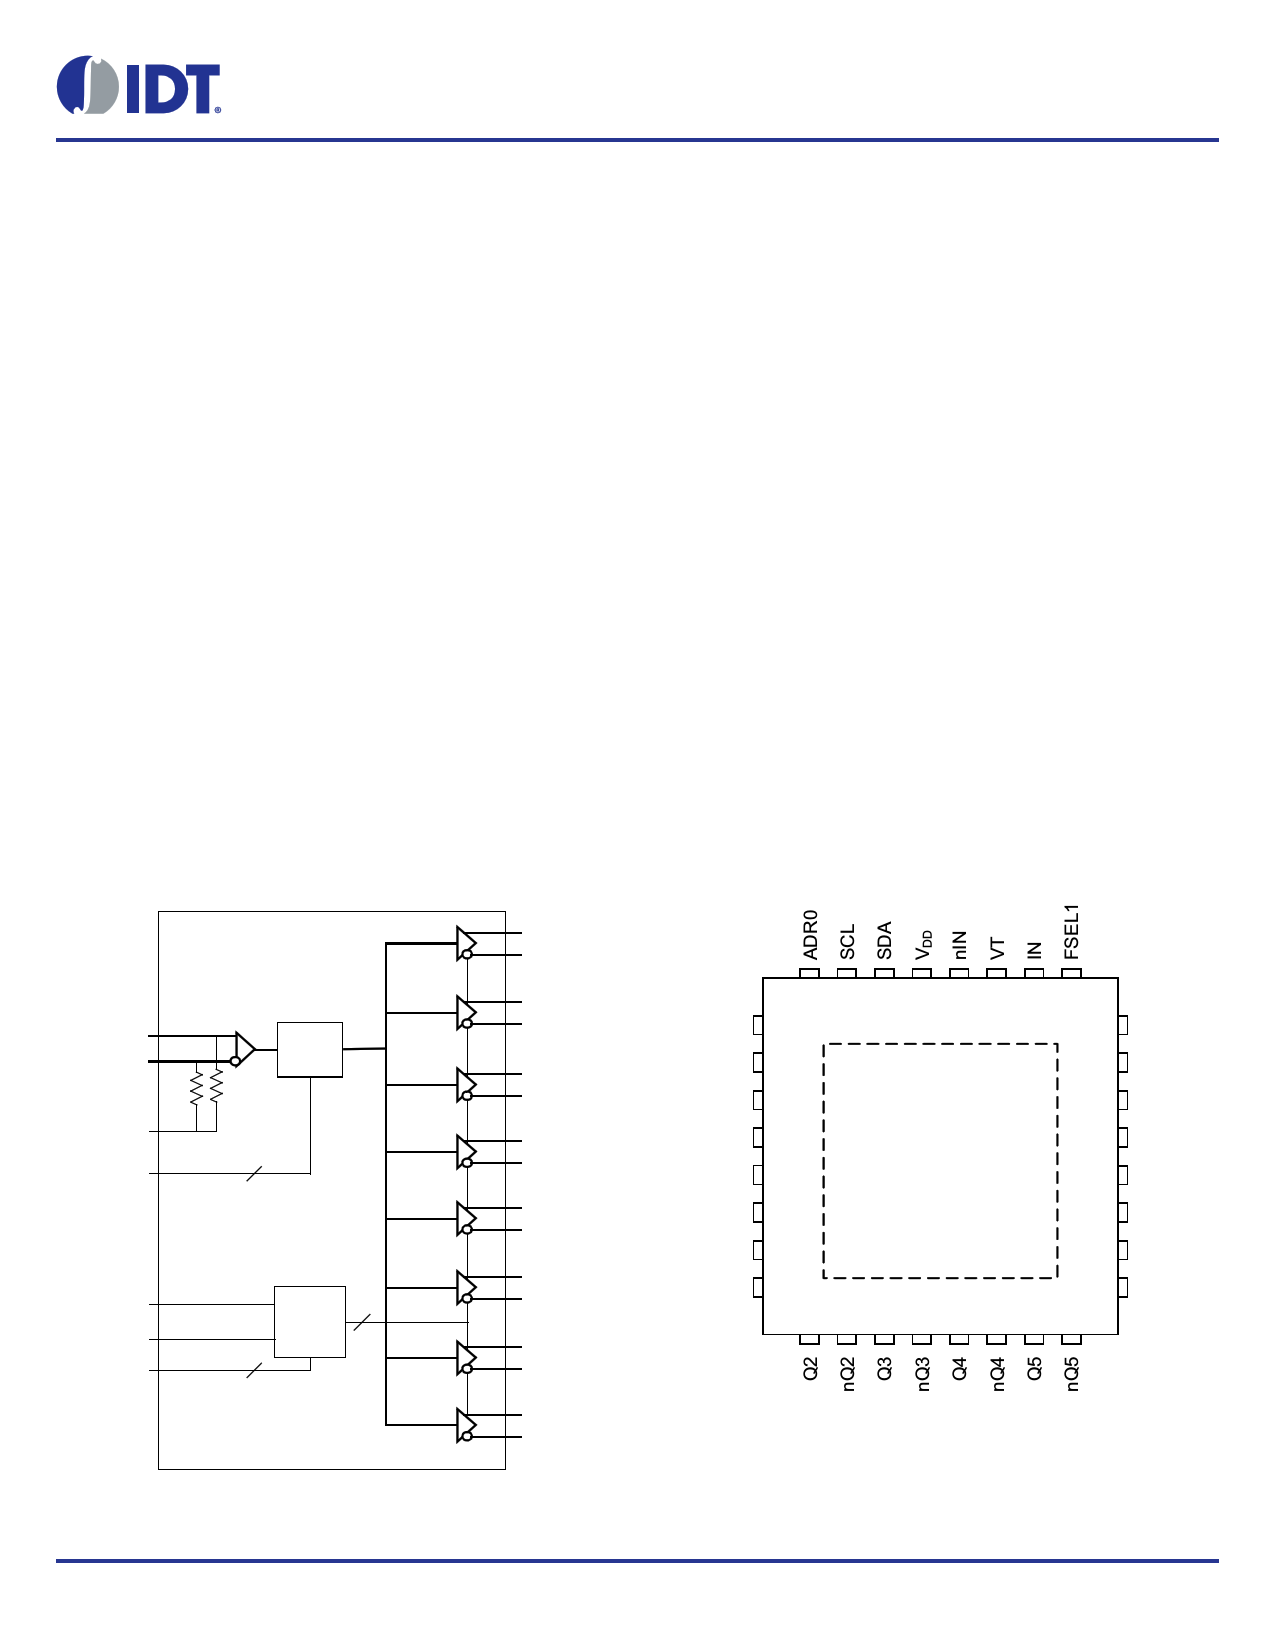 8T74S208C-01 Datasheet, 8T74S208C-01 PDF,ピン配置, 機能